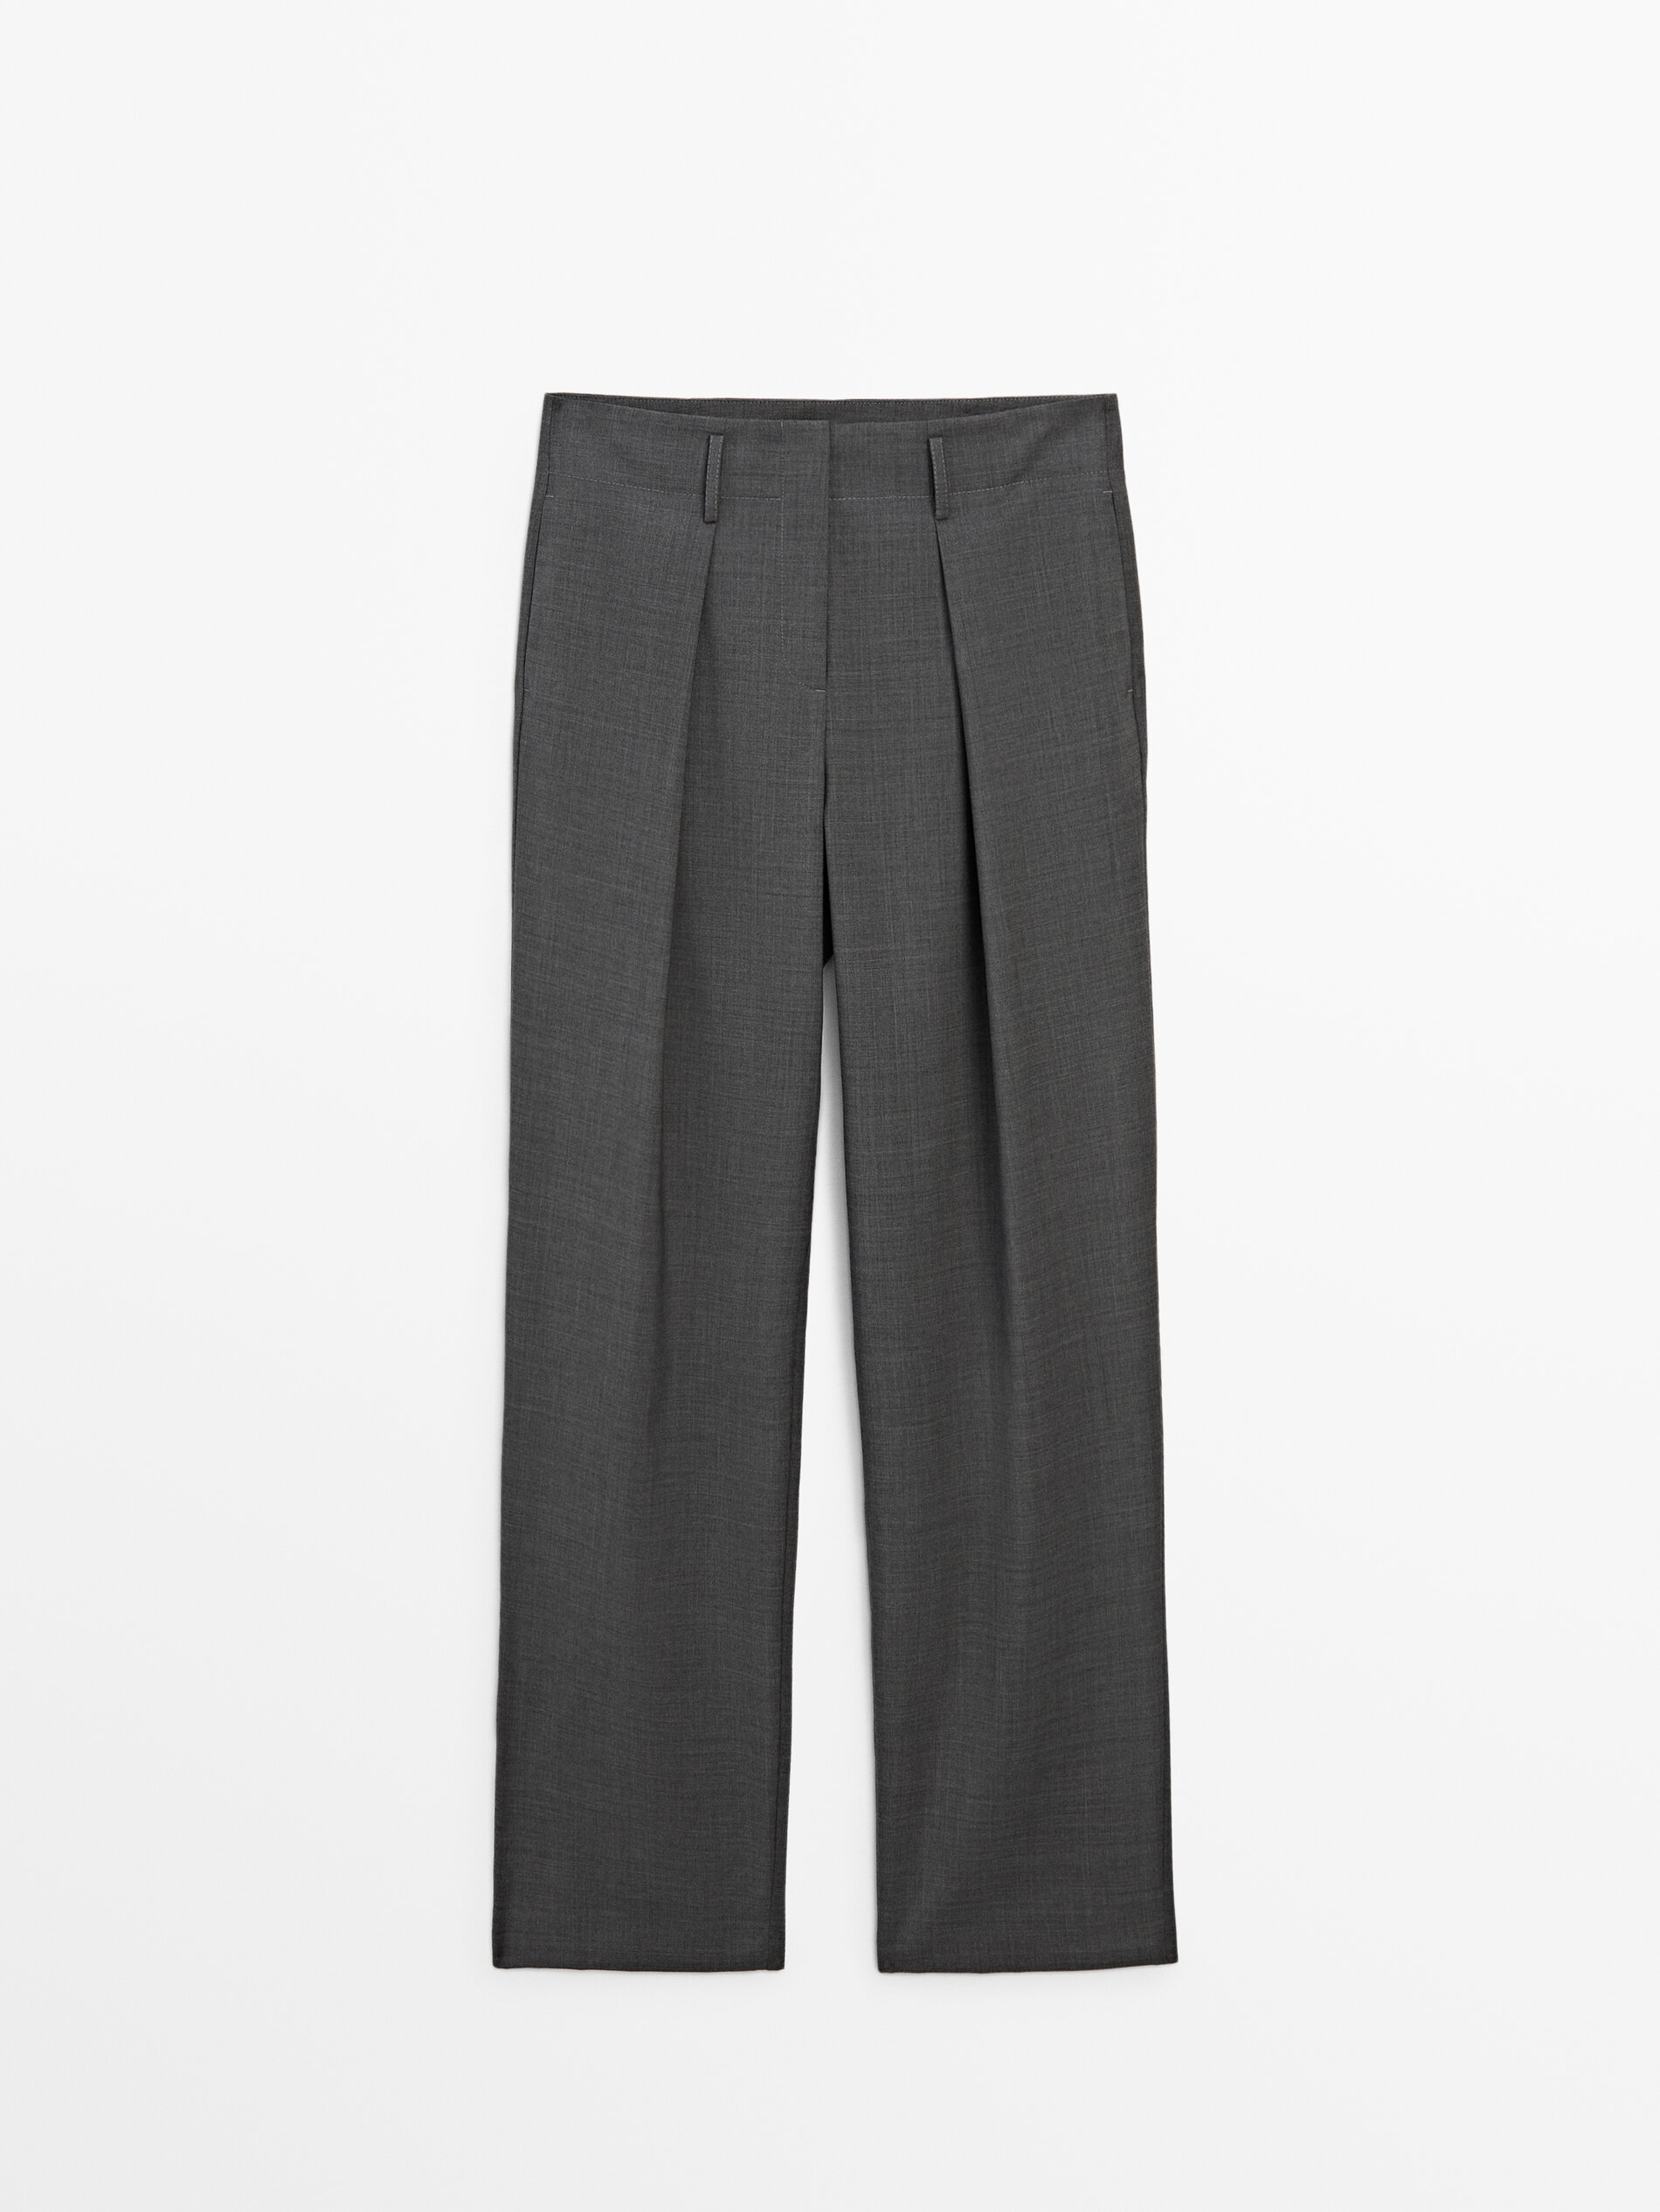 Wide-leg Twill Pants - White/black patterned - Ladies | H&M US